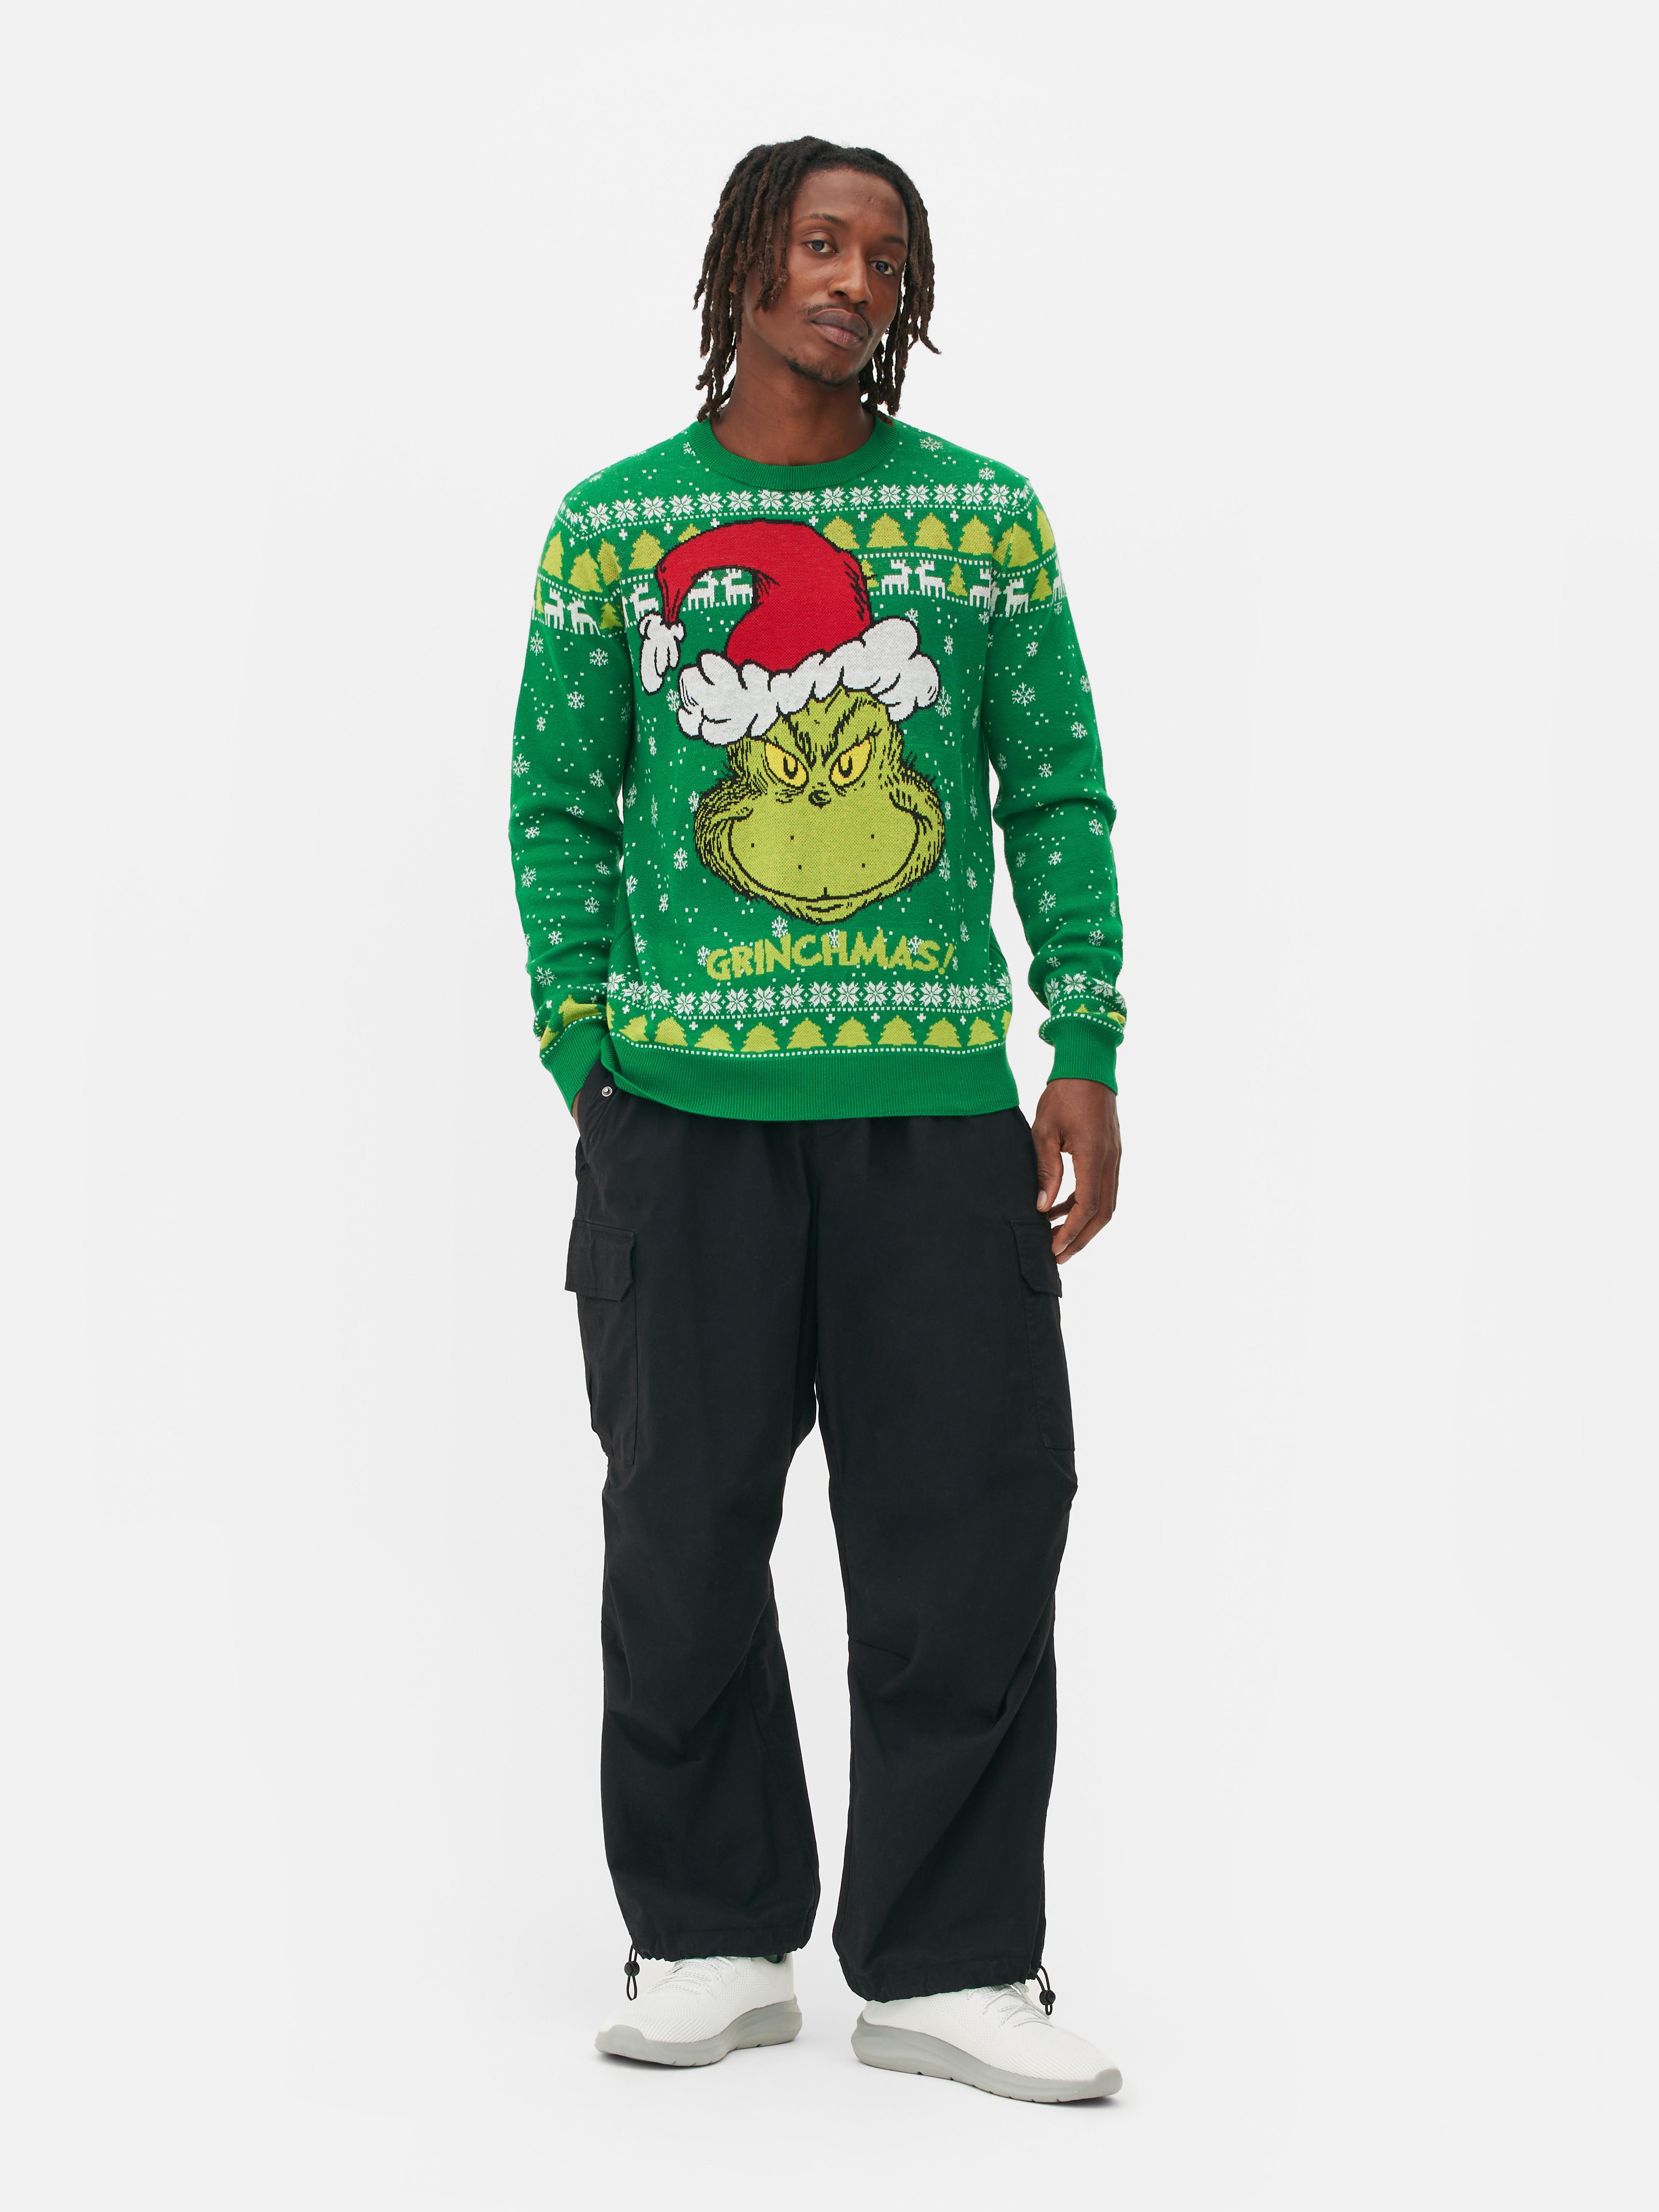 The Grinch Fair Isle Christmas Sweater